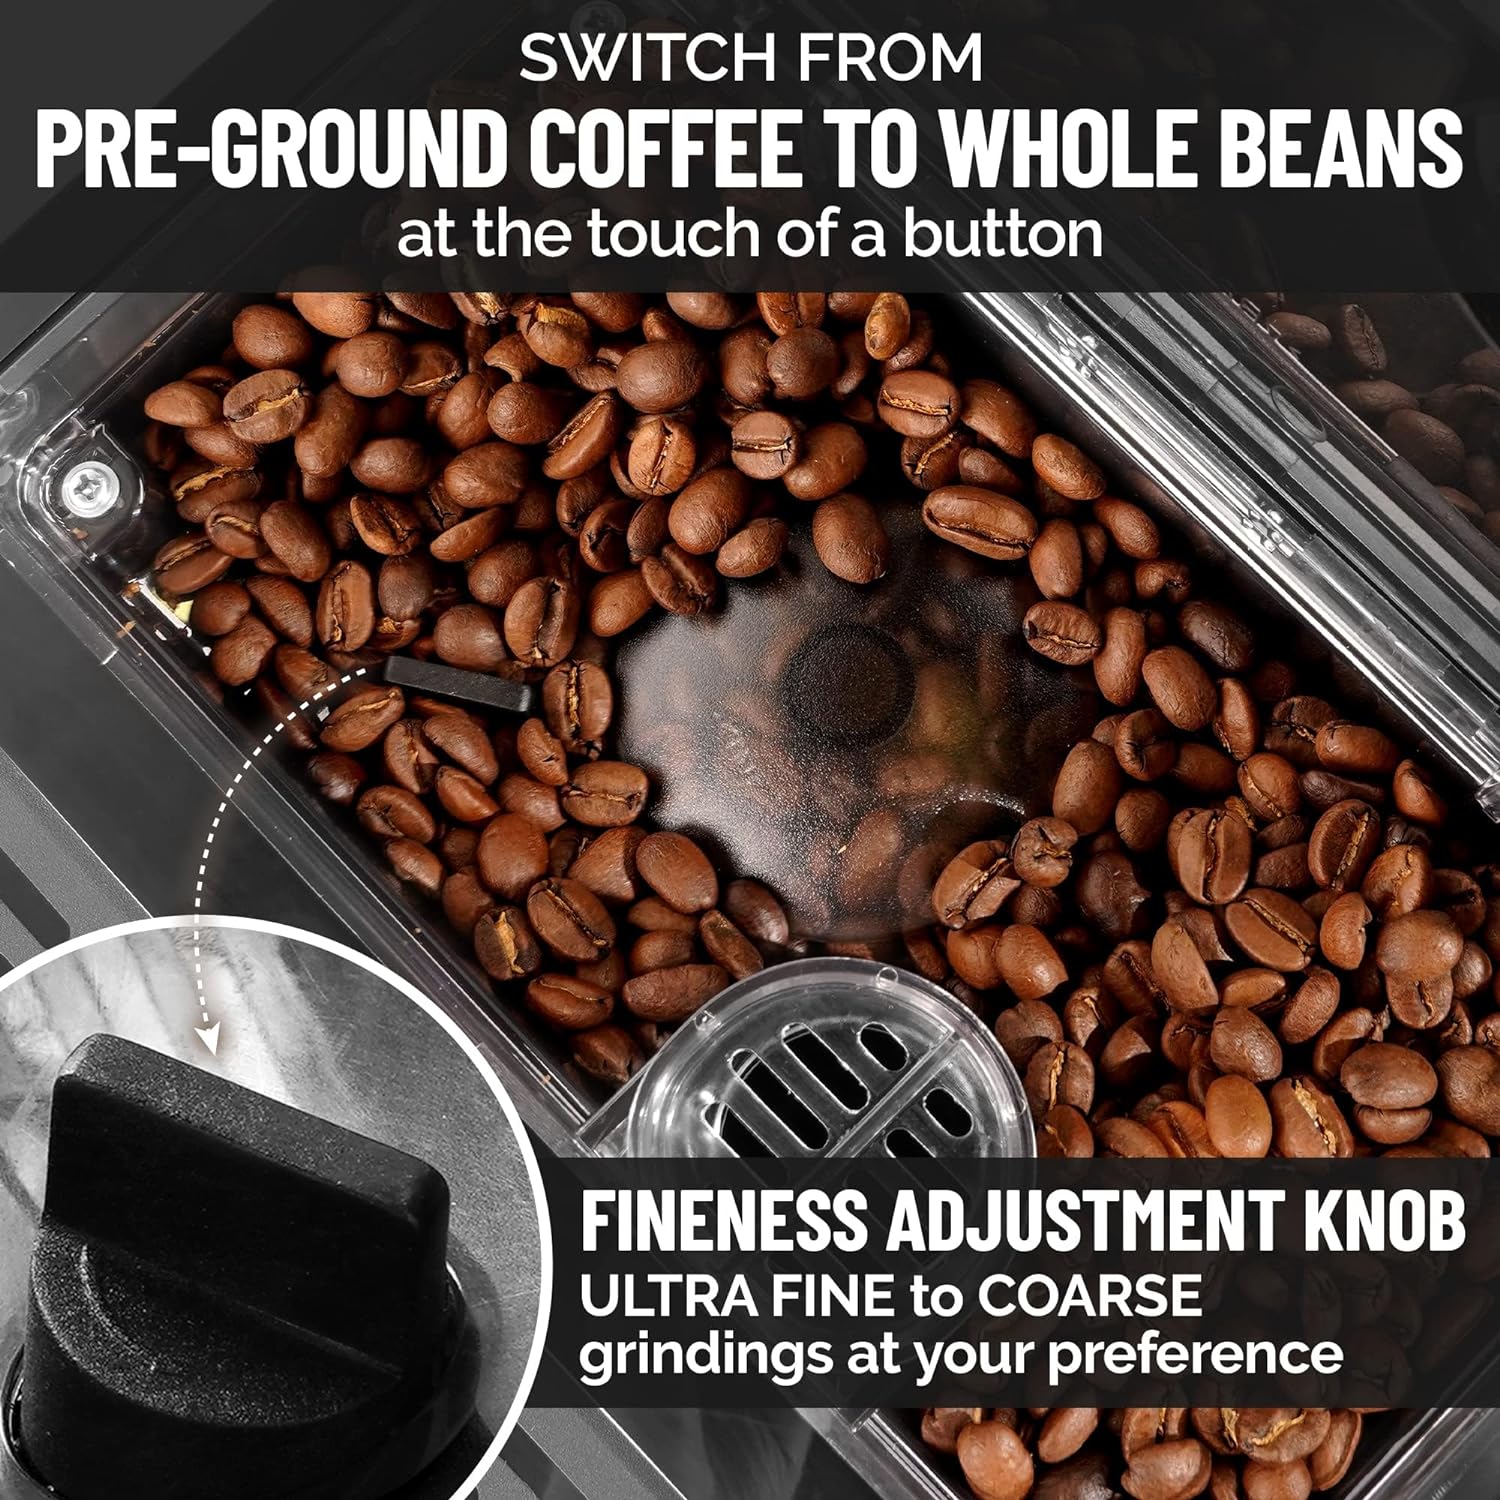 ground coffee dispenser in Coffee & Espresso Machines